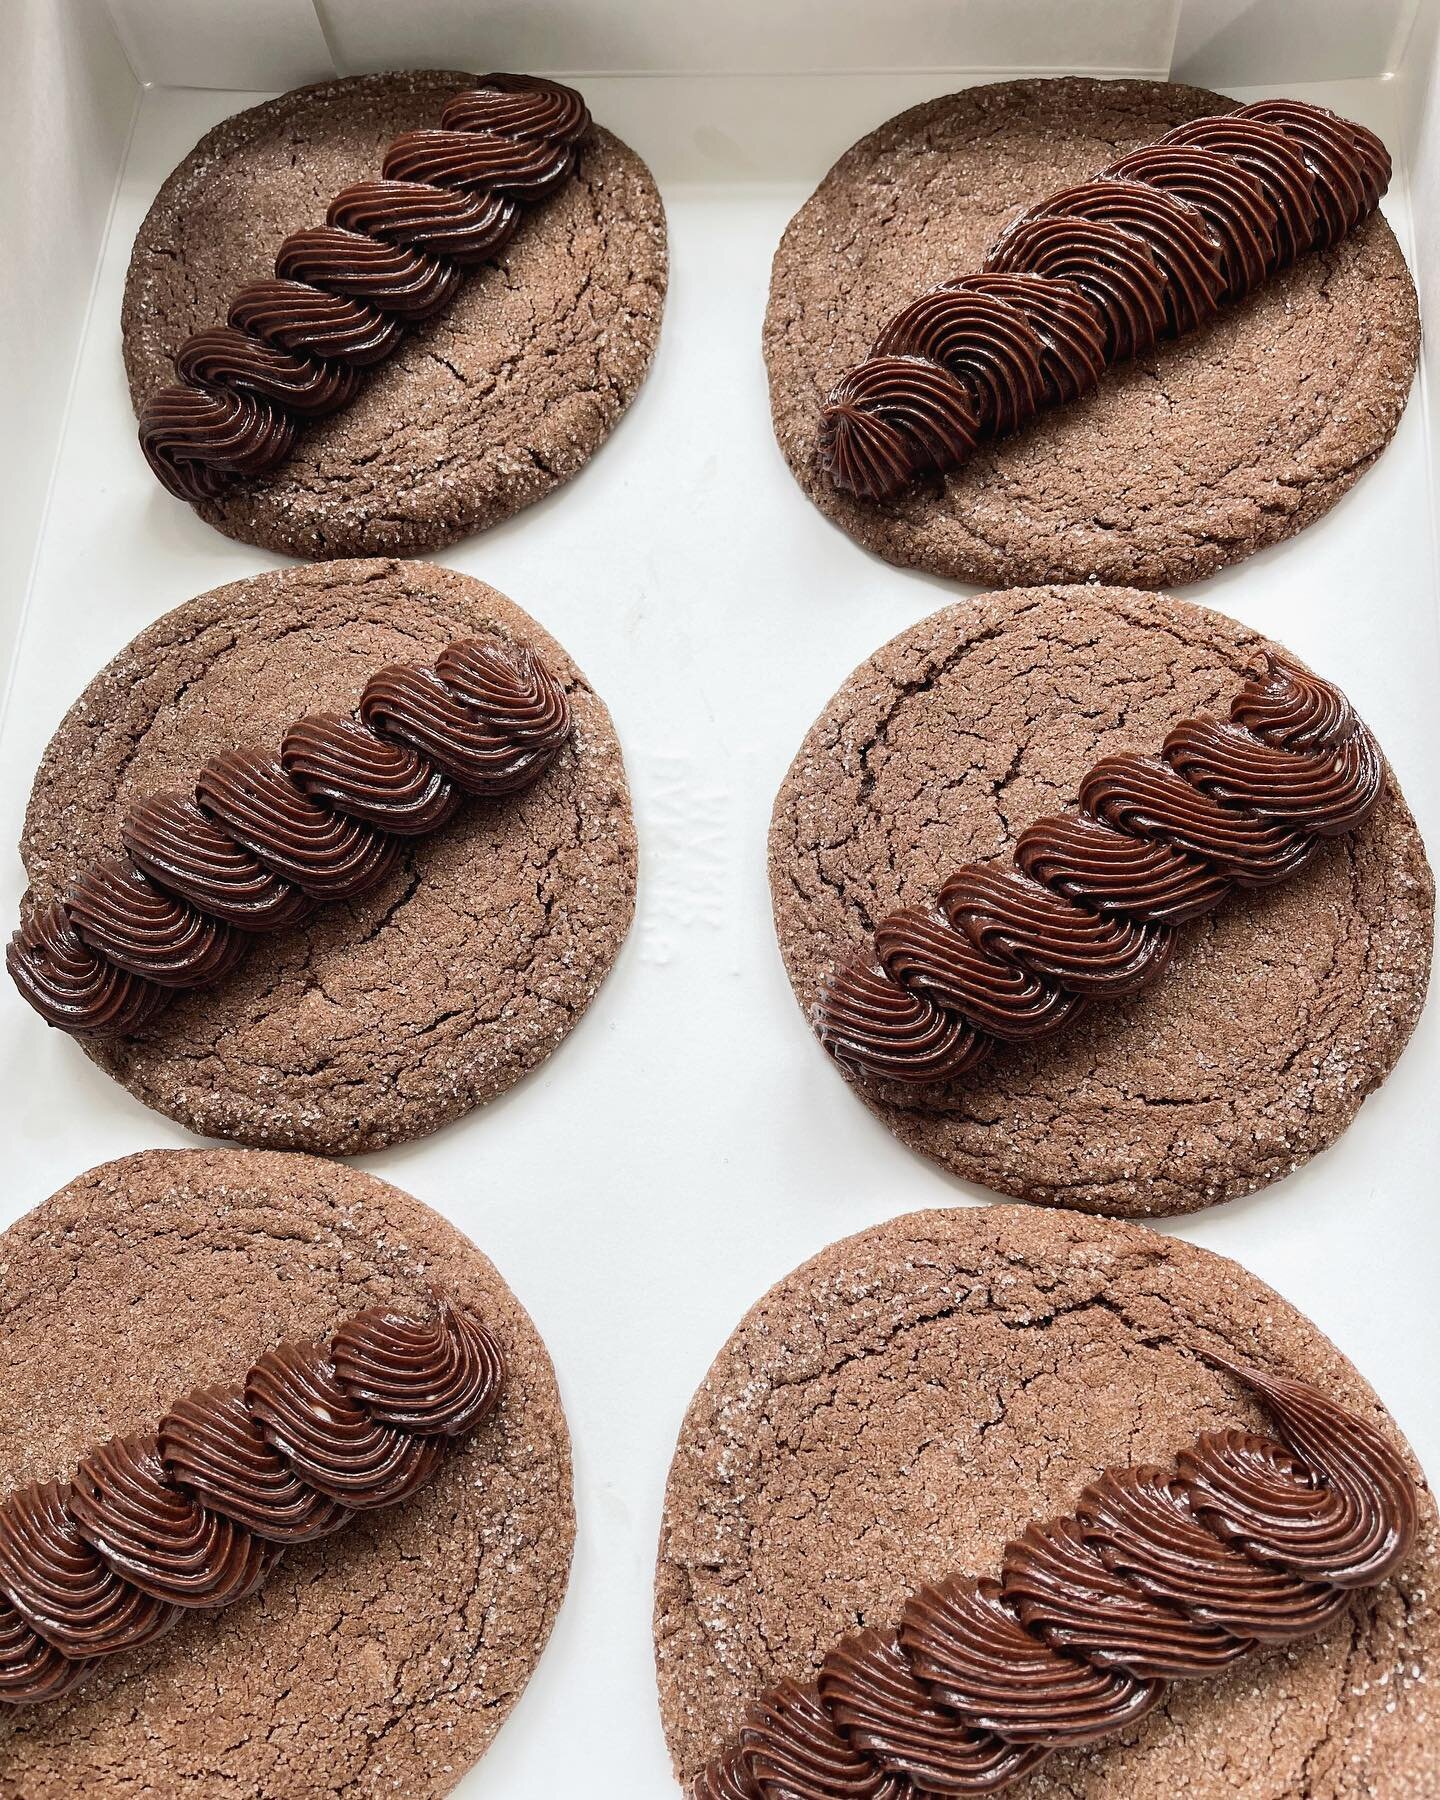 Every #chocolatelovers dream: homemade chocolate cookies and chocolate buttercream. 🍫❤️